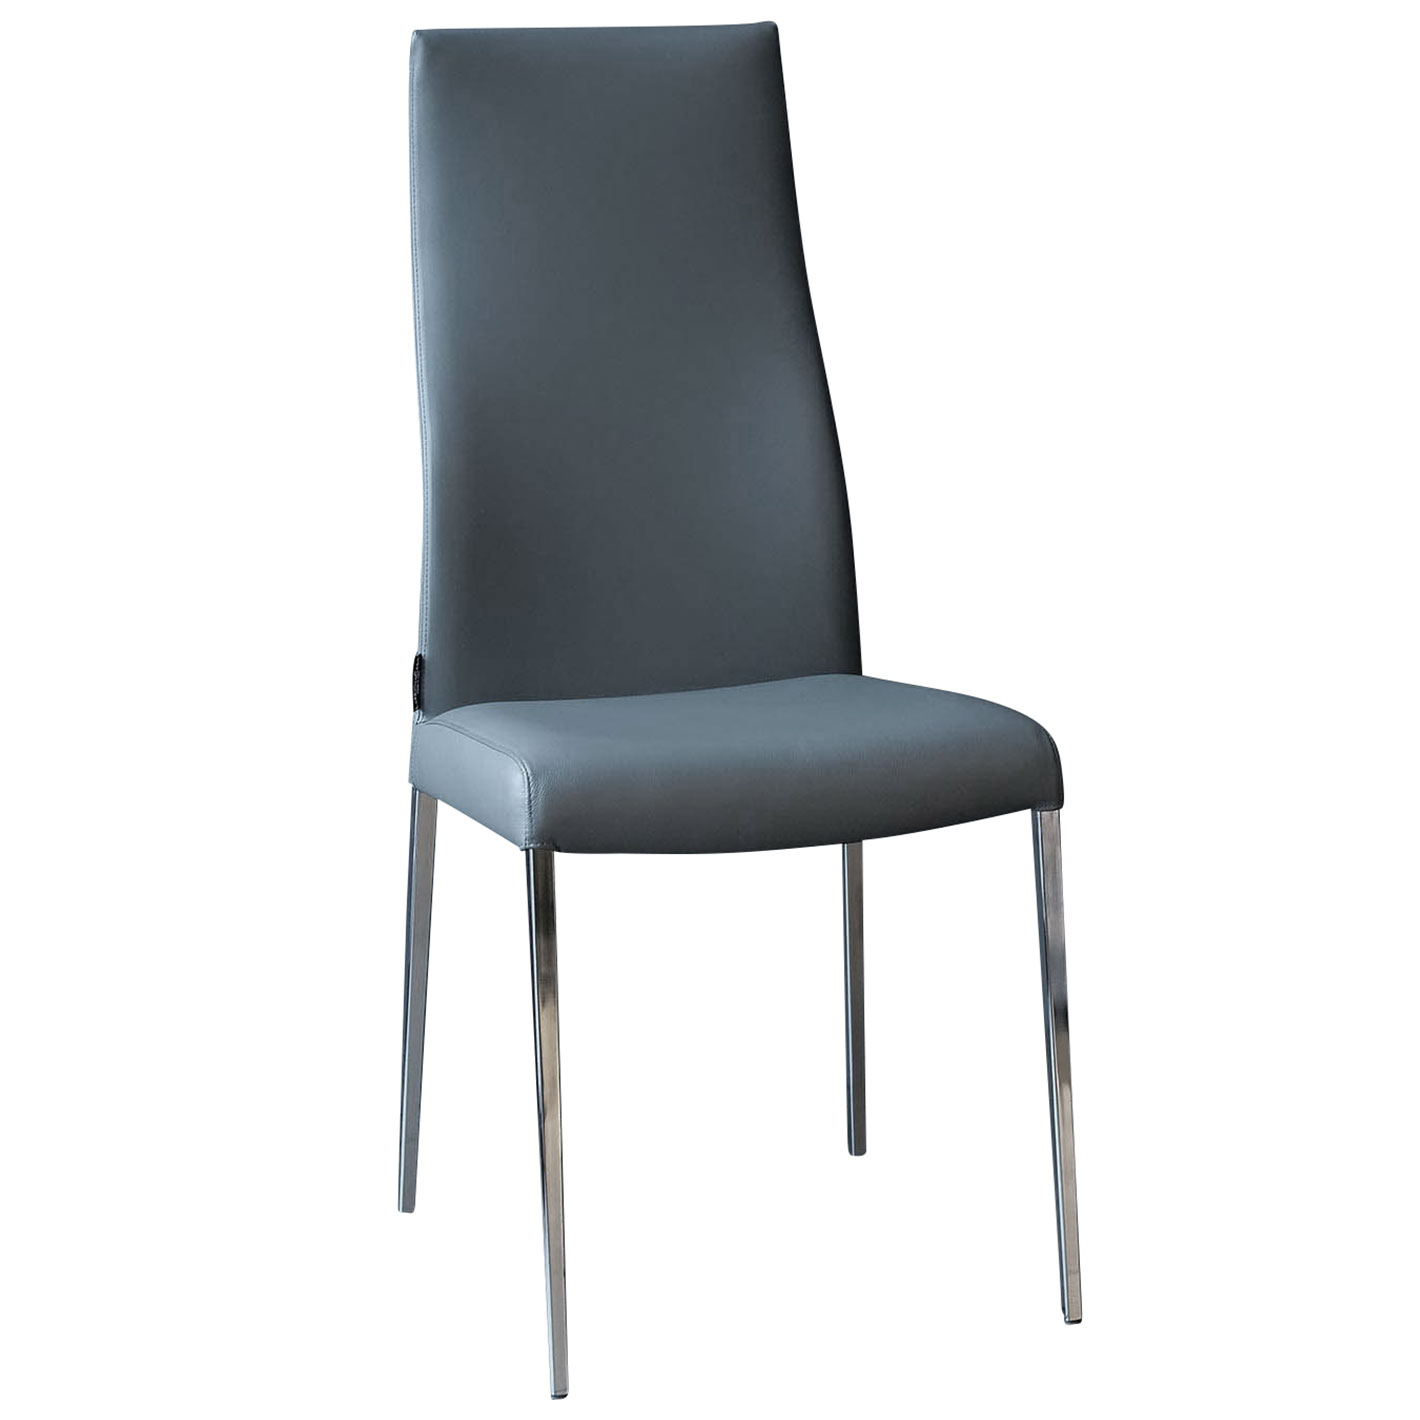 Stühle unter 500 Euro - SANTIAGO SOFT Stuhl